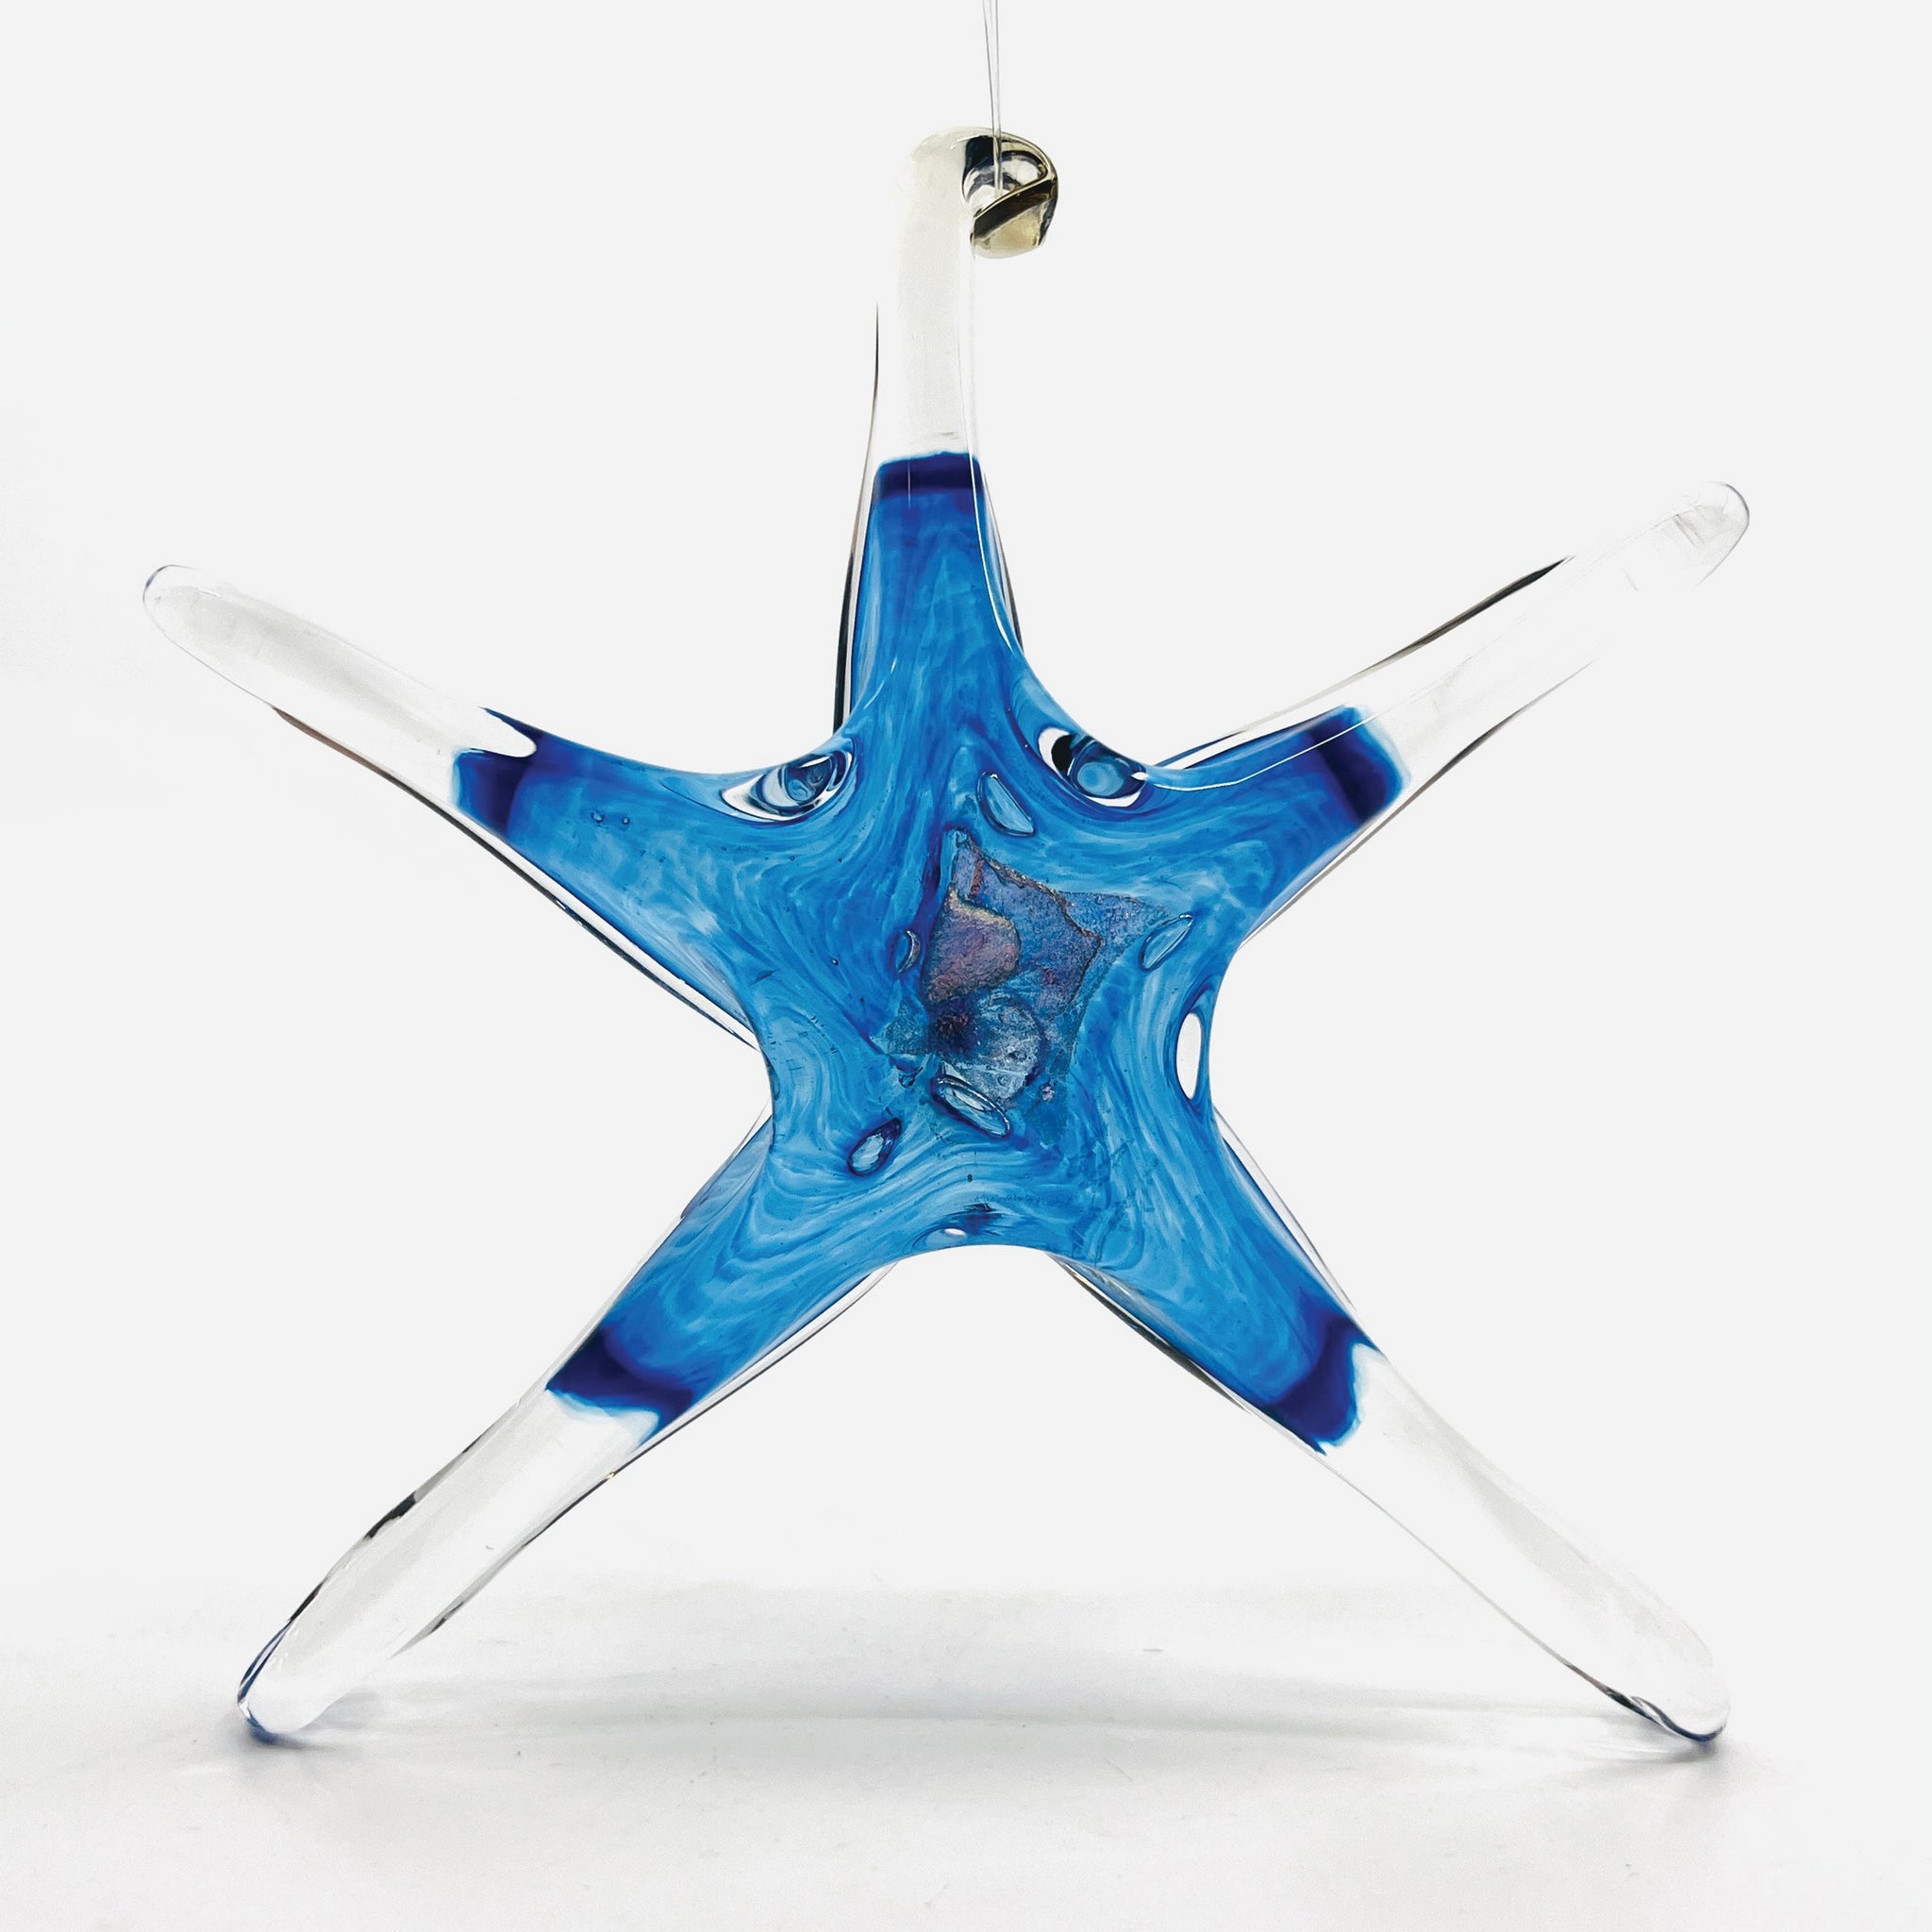 FREE SHIPPING* Mini Ornament, Starry Night - Luke Adams Glass Blowing Studio